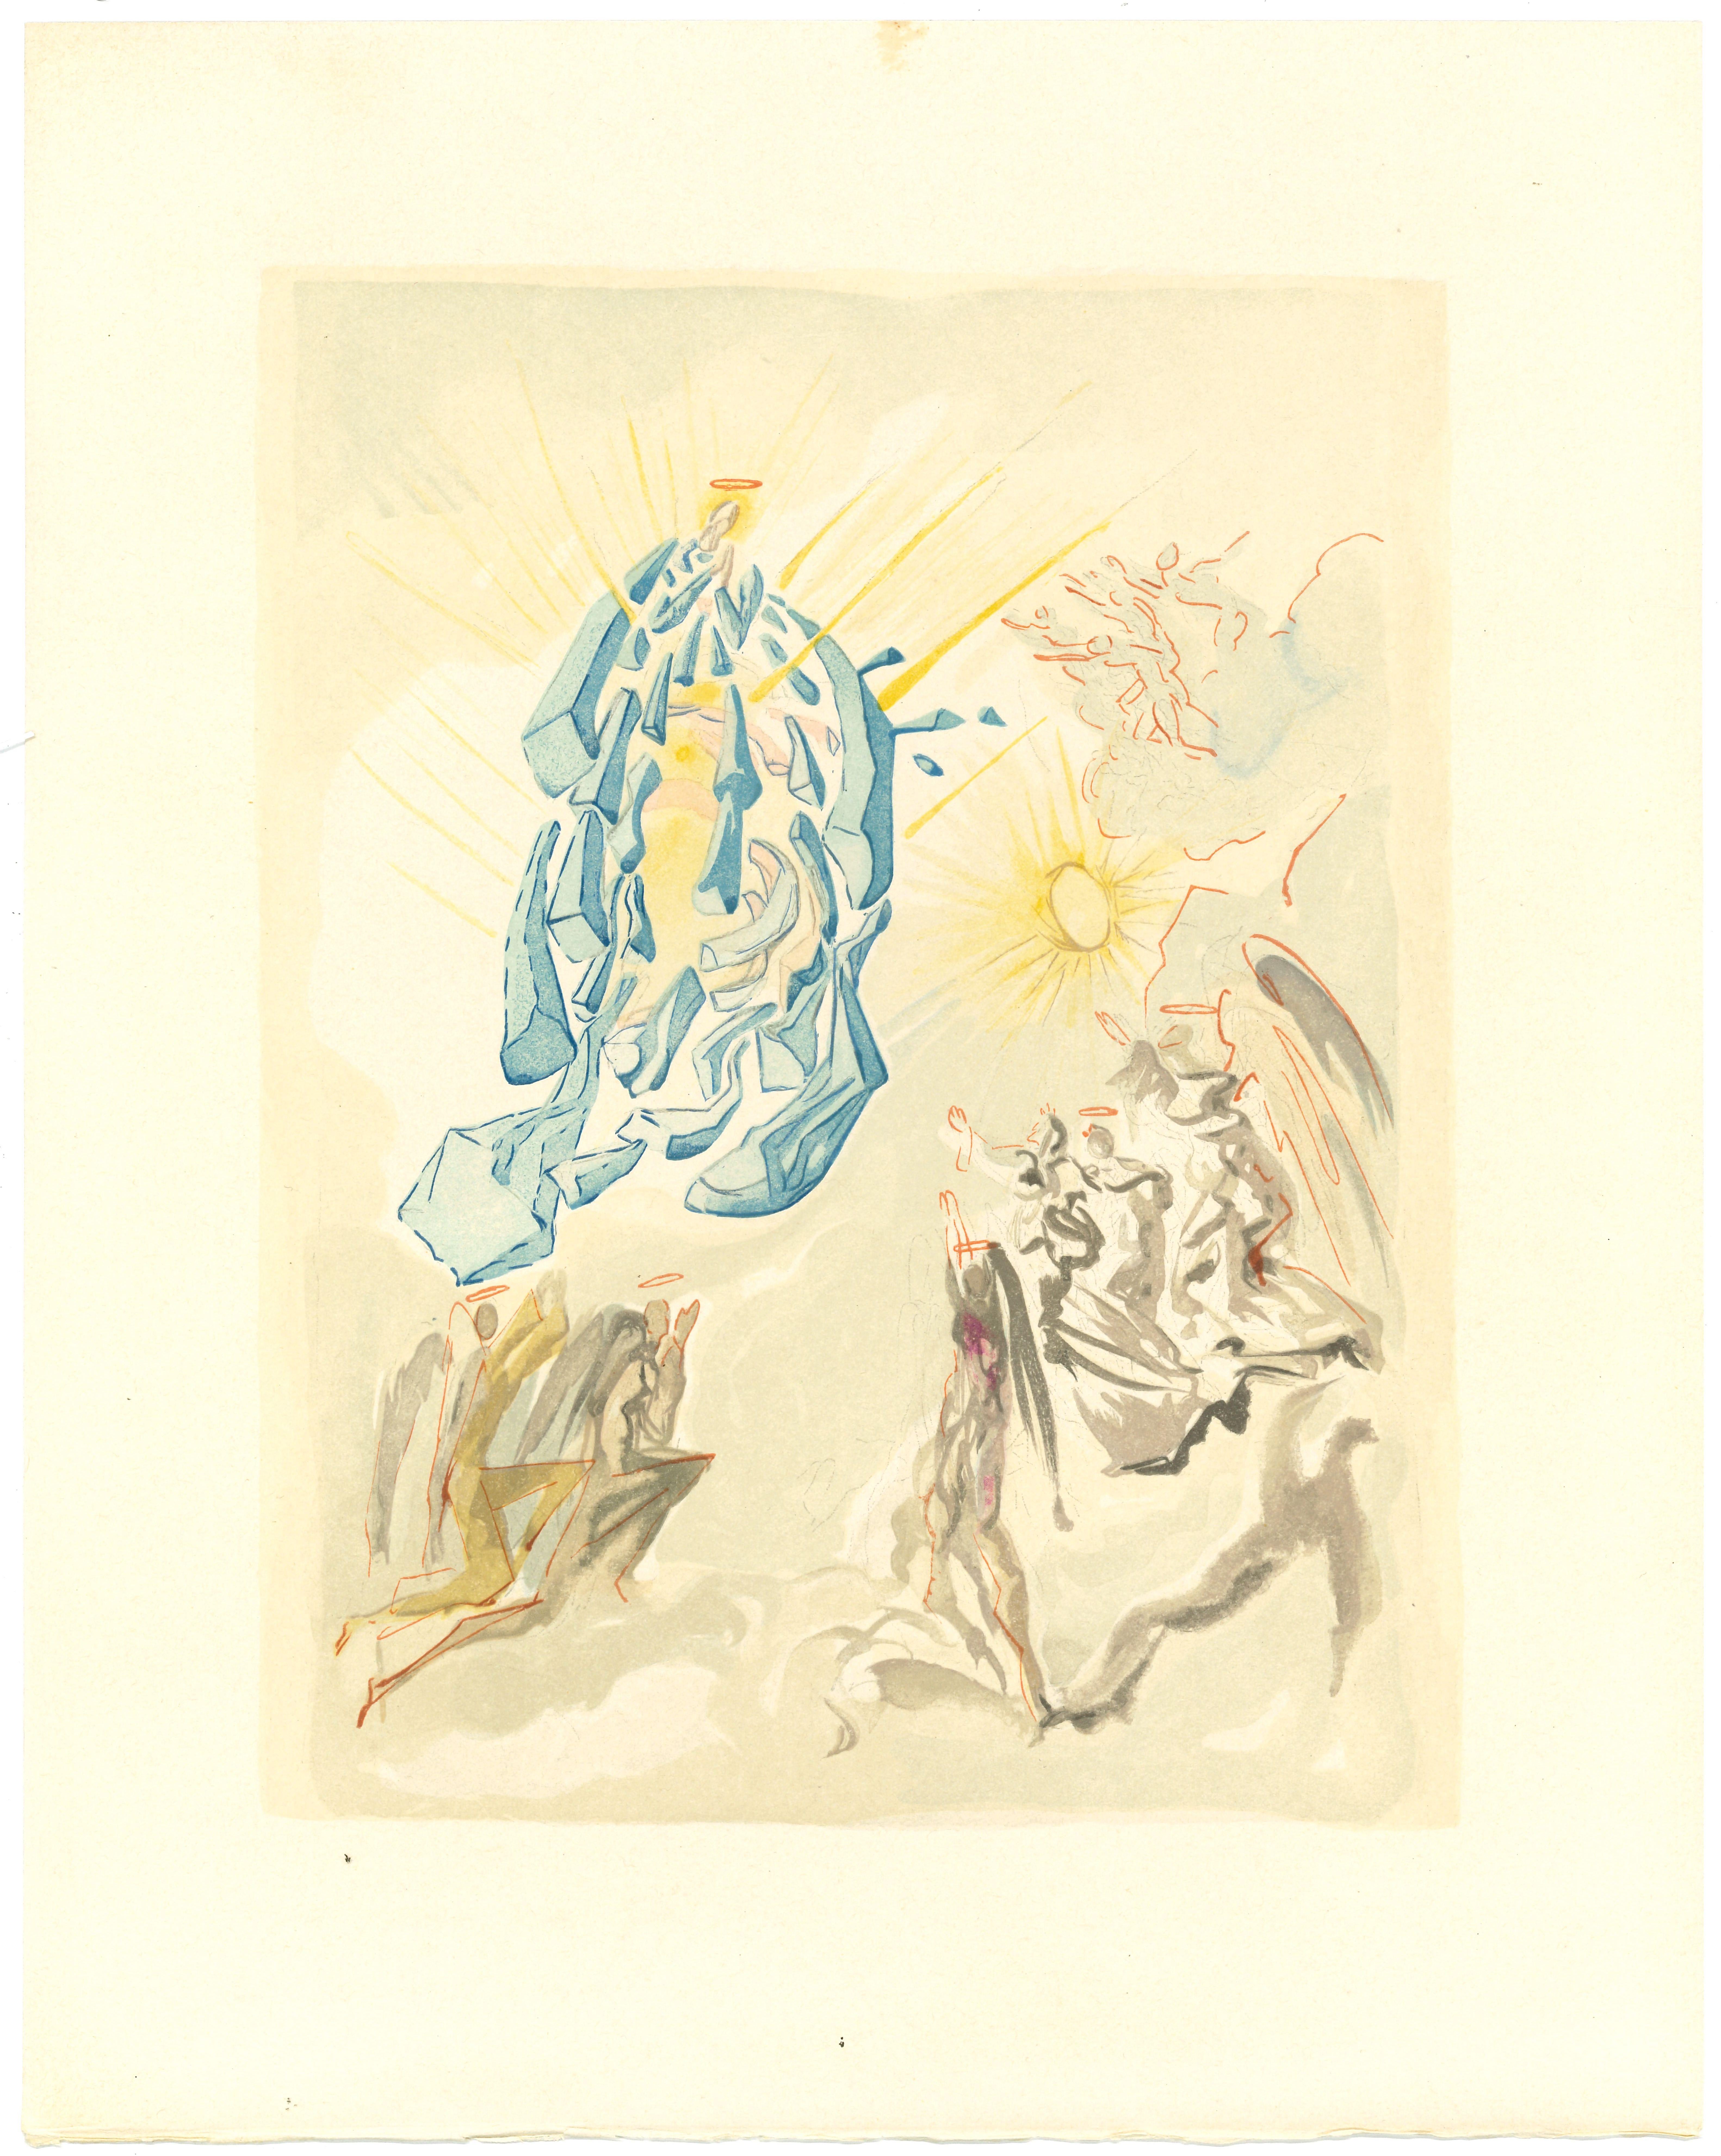 Salvador Dalí Figurative Print - The Apotheosis of Virgin Mary - Woodcut attr. to Salvador Dalì - 1963